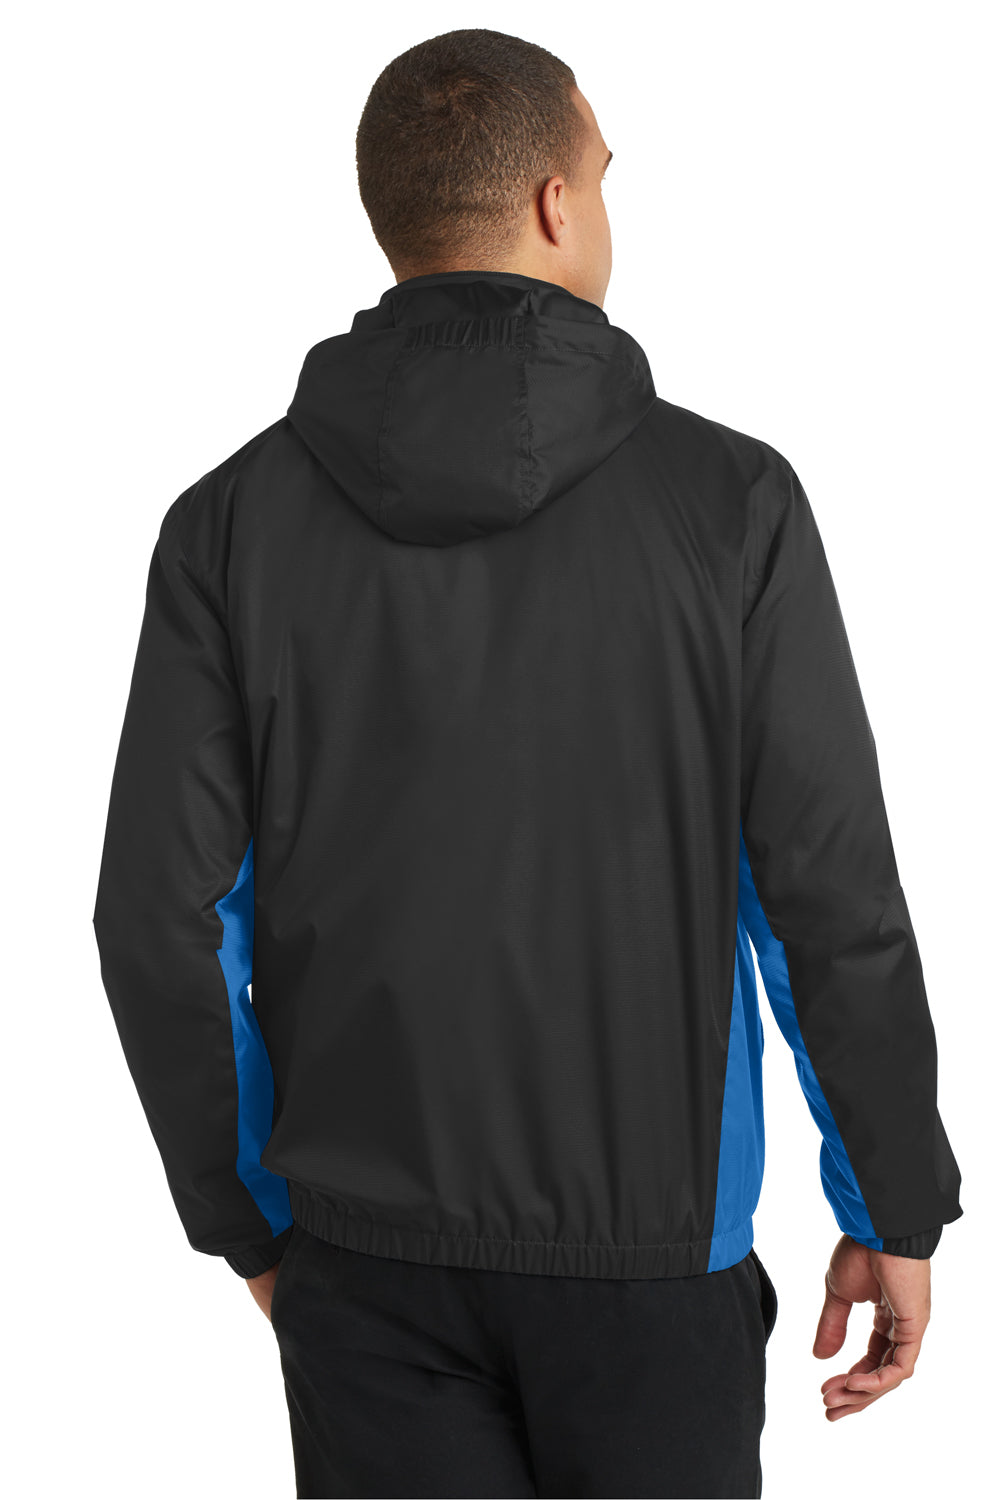 Port Authority J330 Mens Core Wind & Water Resistant Full Zip Jacket Black/Royal Blue Back